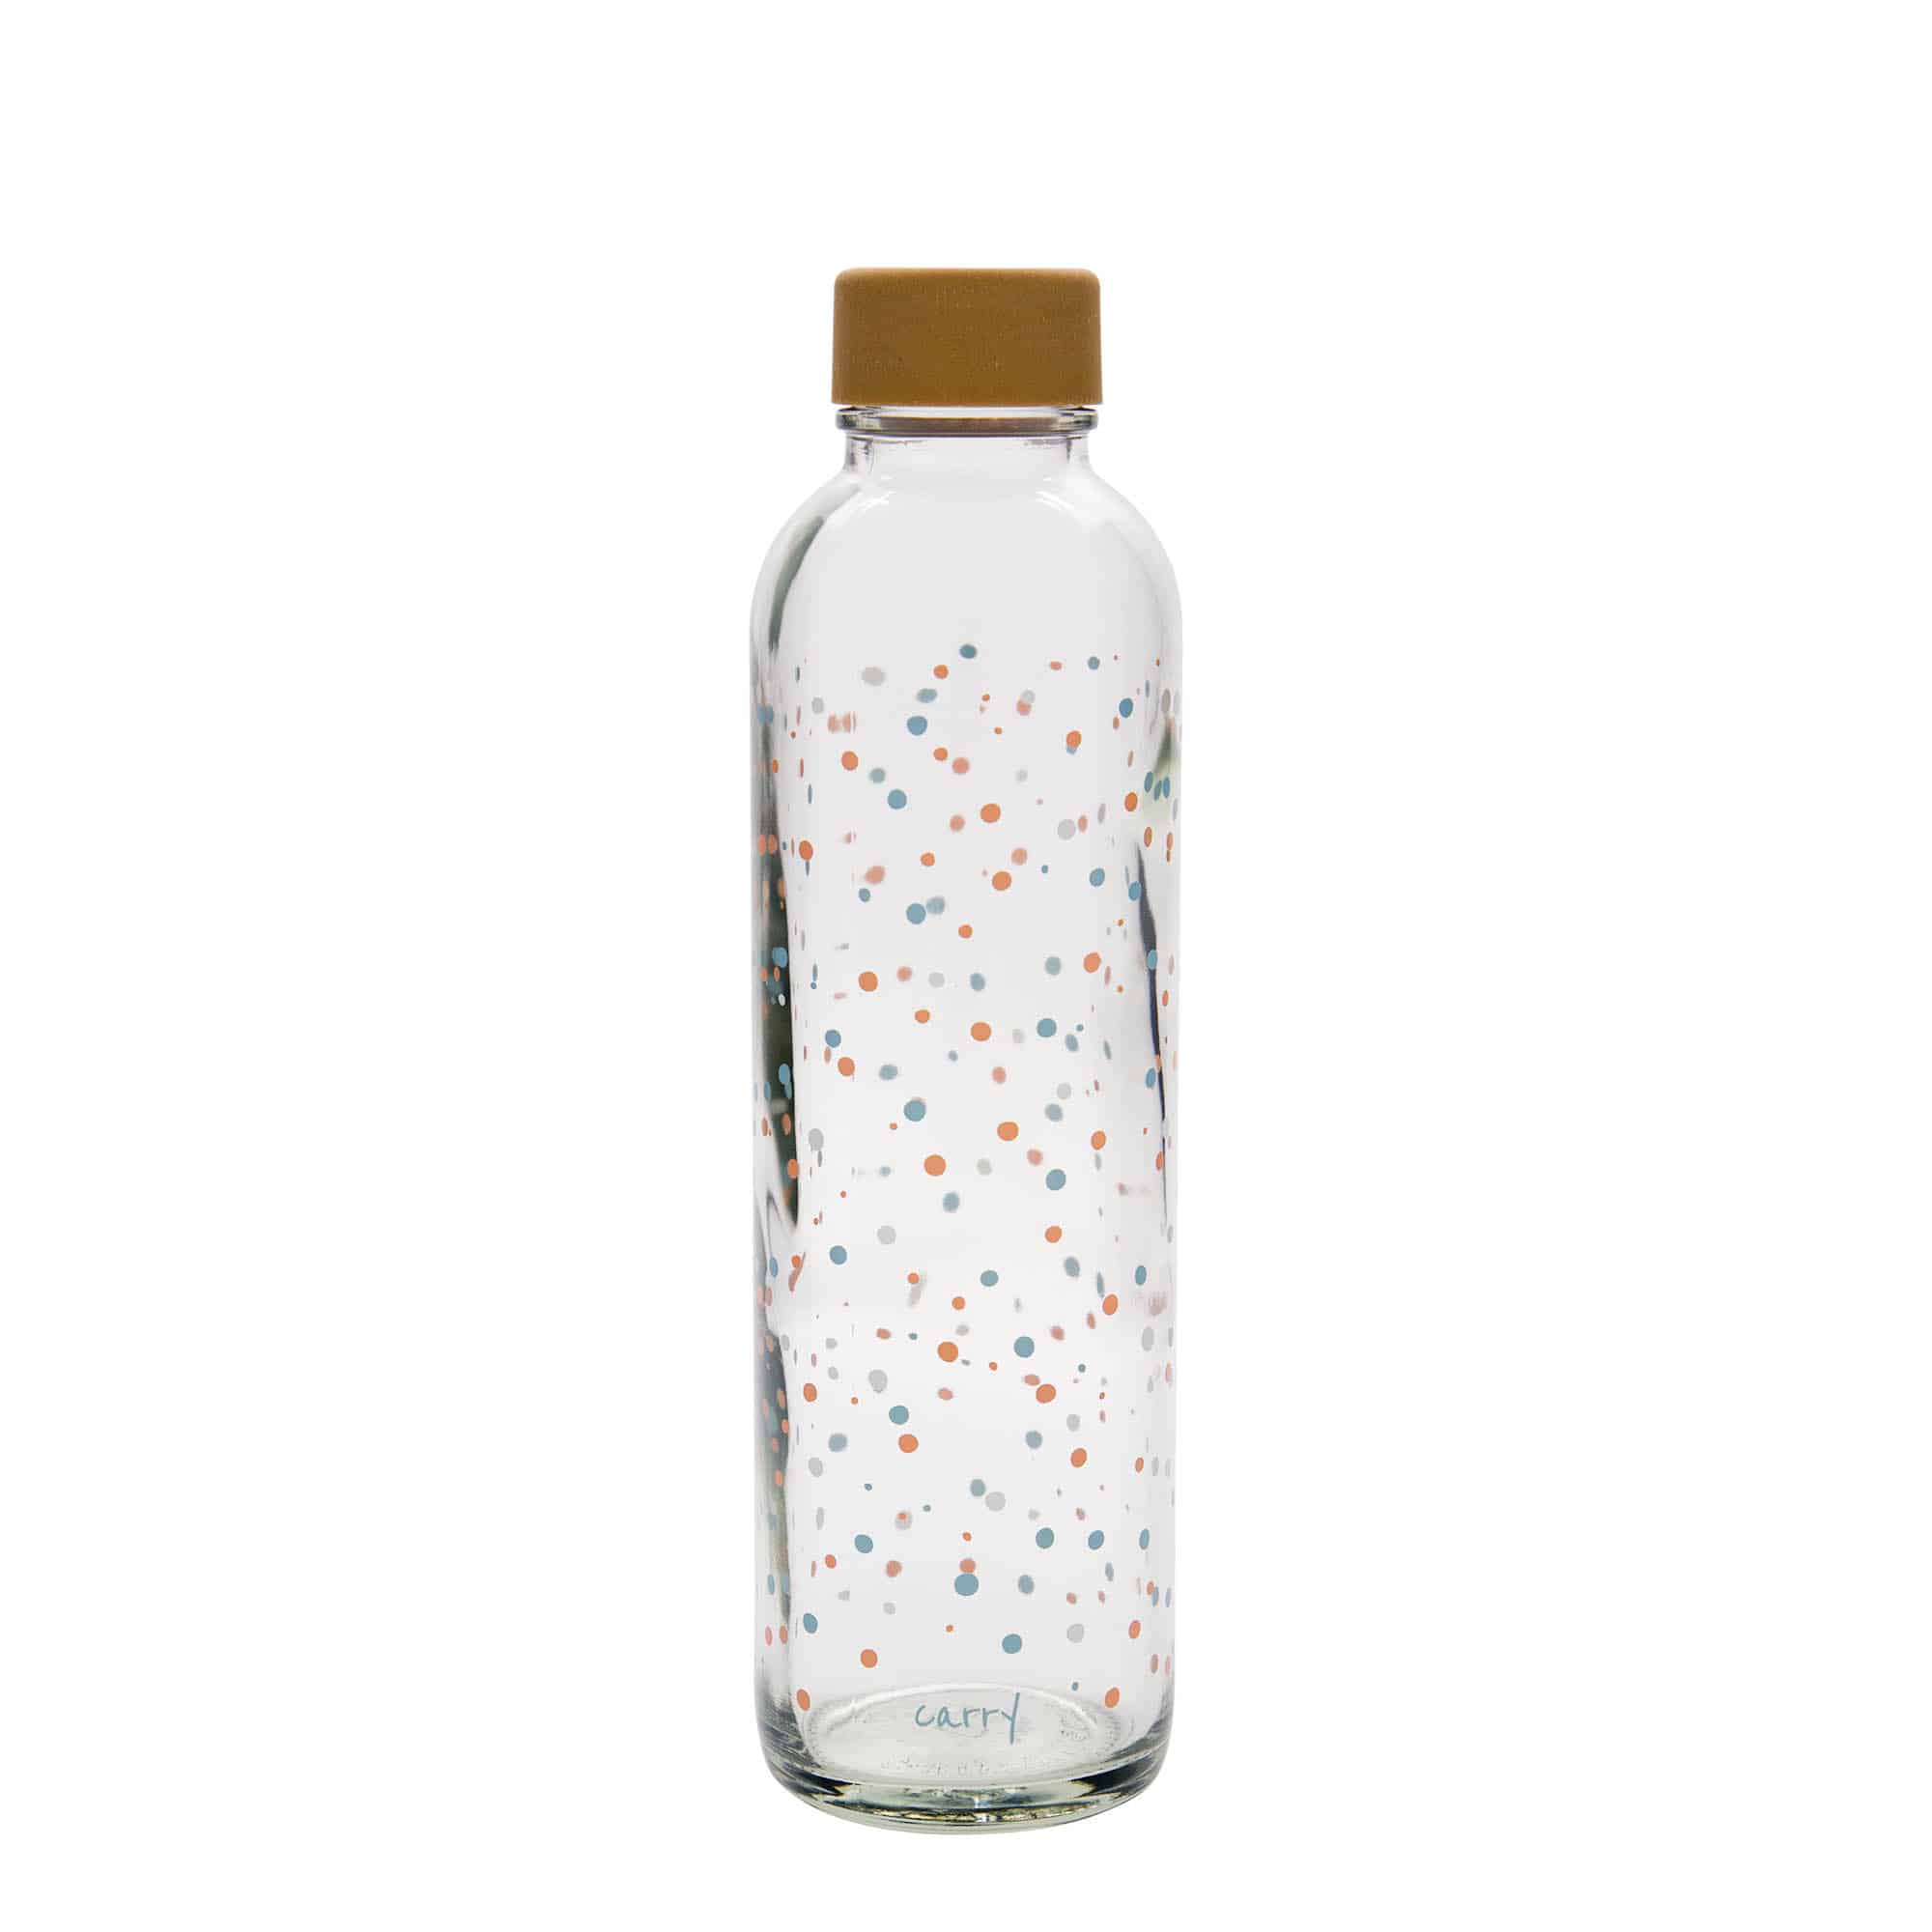 700 ml water bottle ‘CARRY Bottle’, print: Flying Circles, closure: screw cap